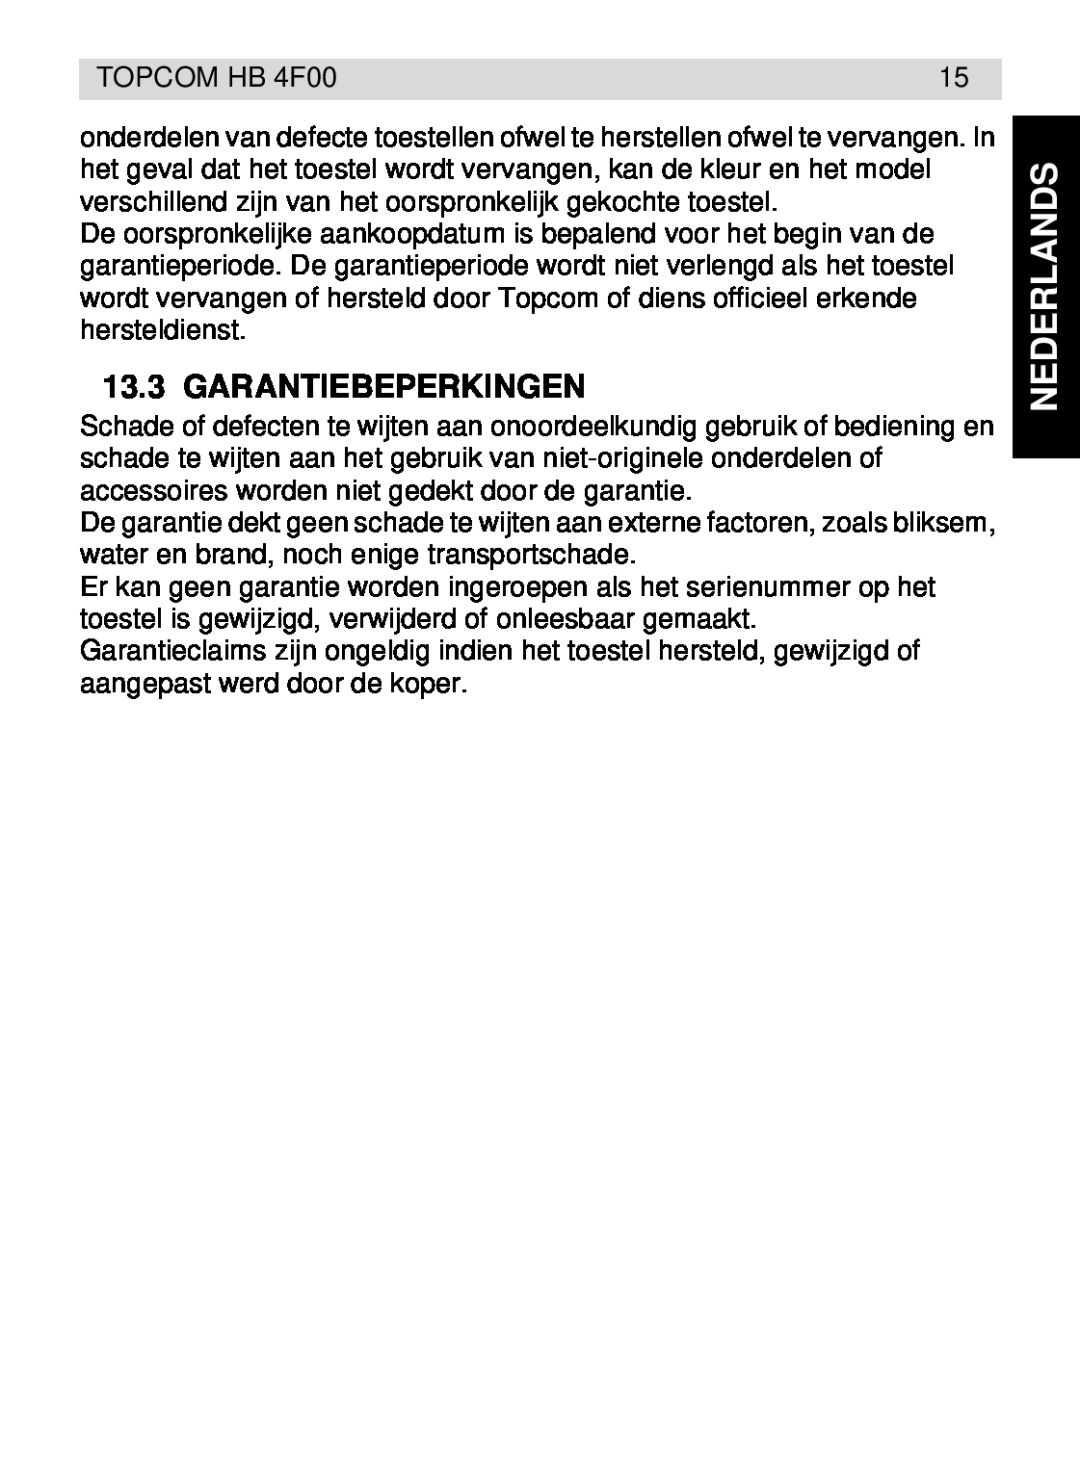 Topcom HB 4F00 manual Garantiebeperkingen, Nederlands 